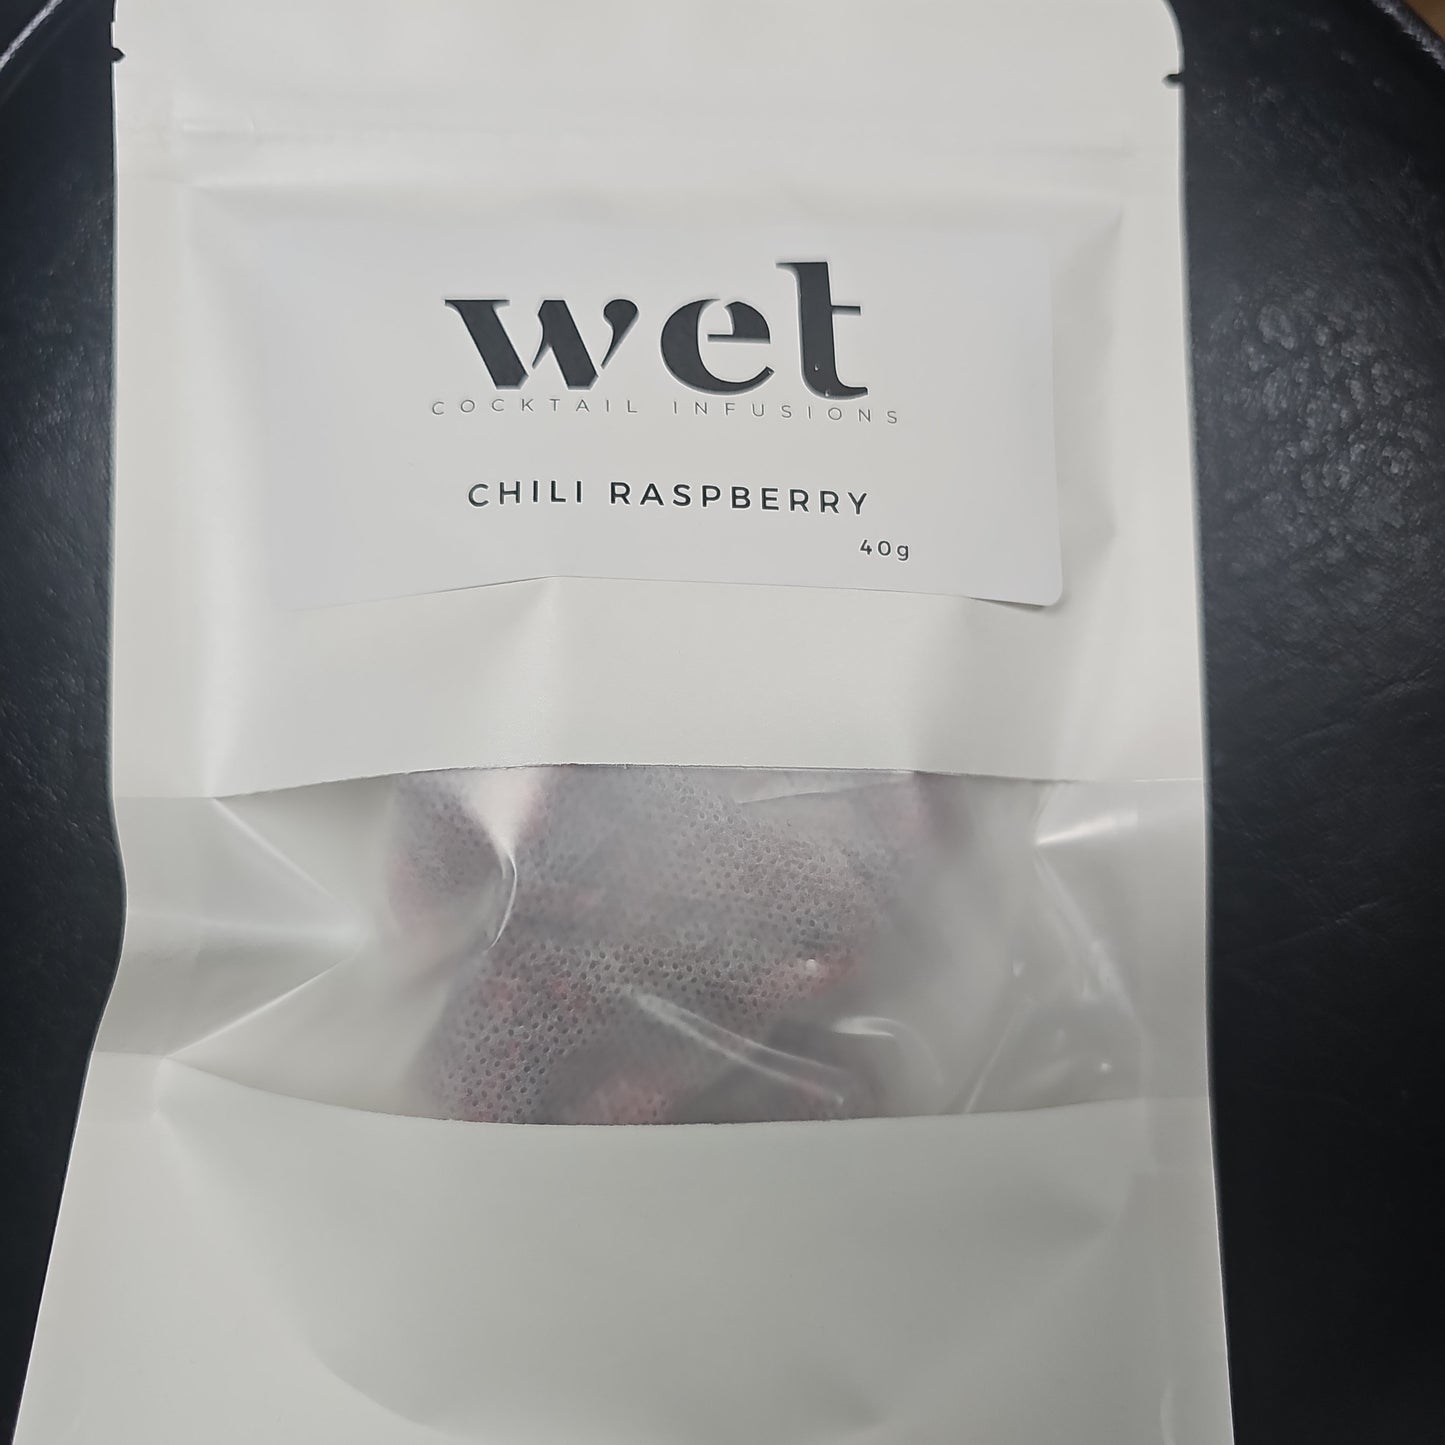 Wet Chili Raspberry alcohol infusion kit